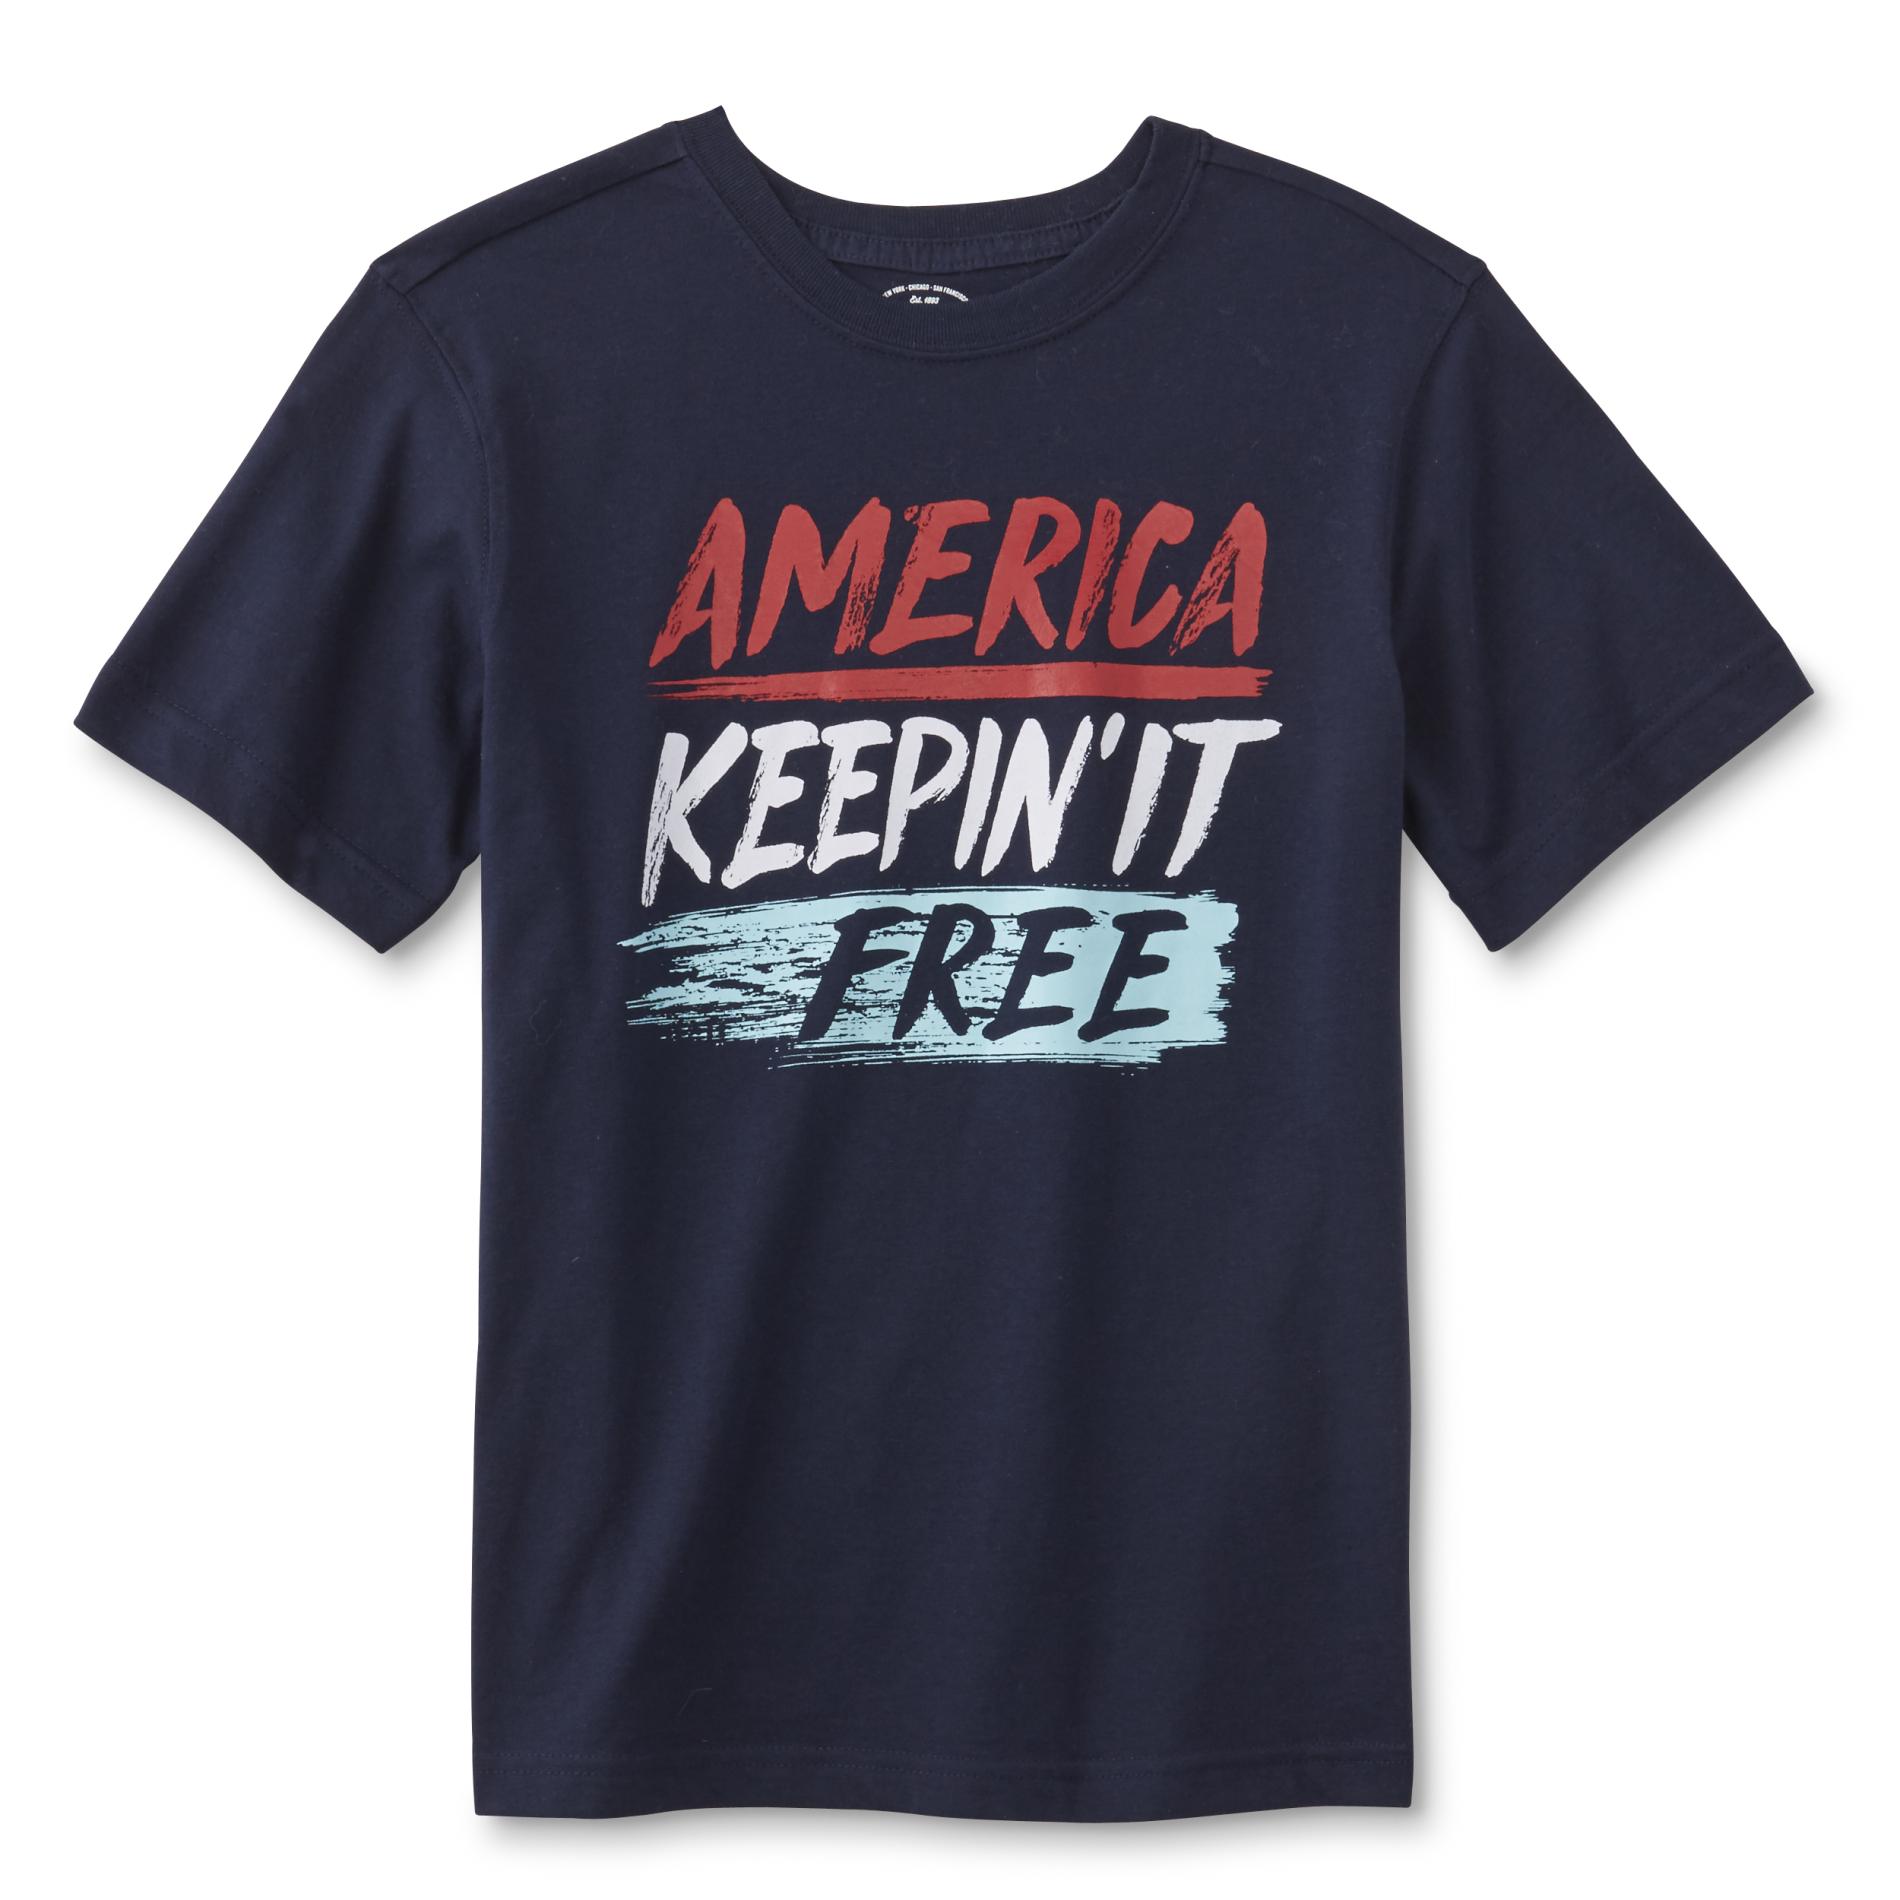 Roebuck & Co. Boys' Graphic T-Shirt - America Keepin' It Free